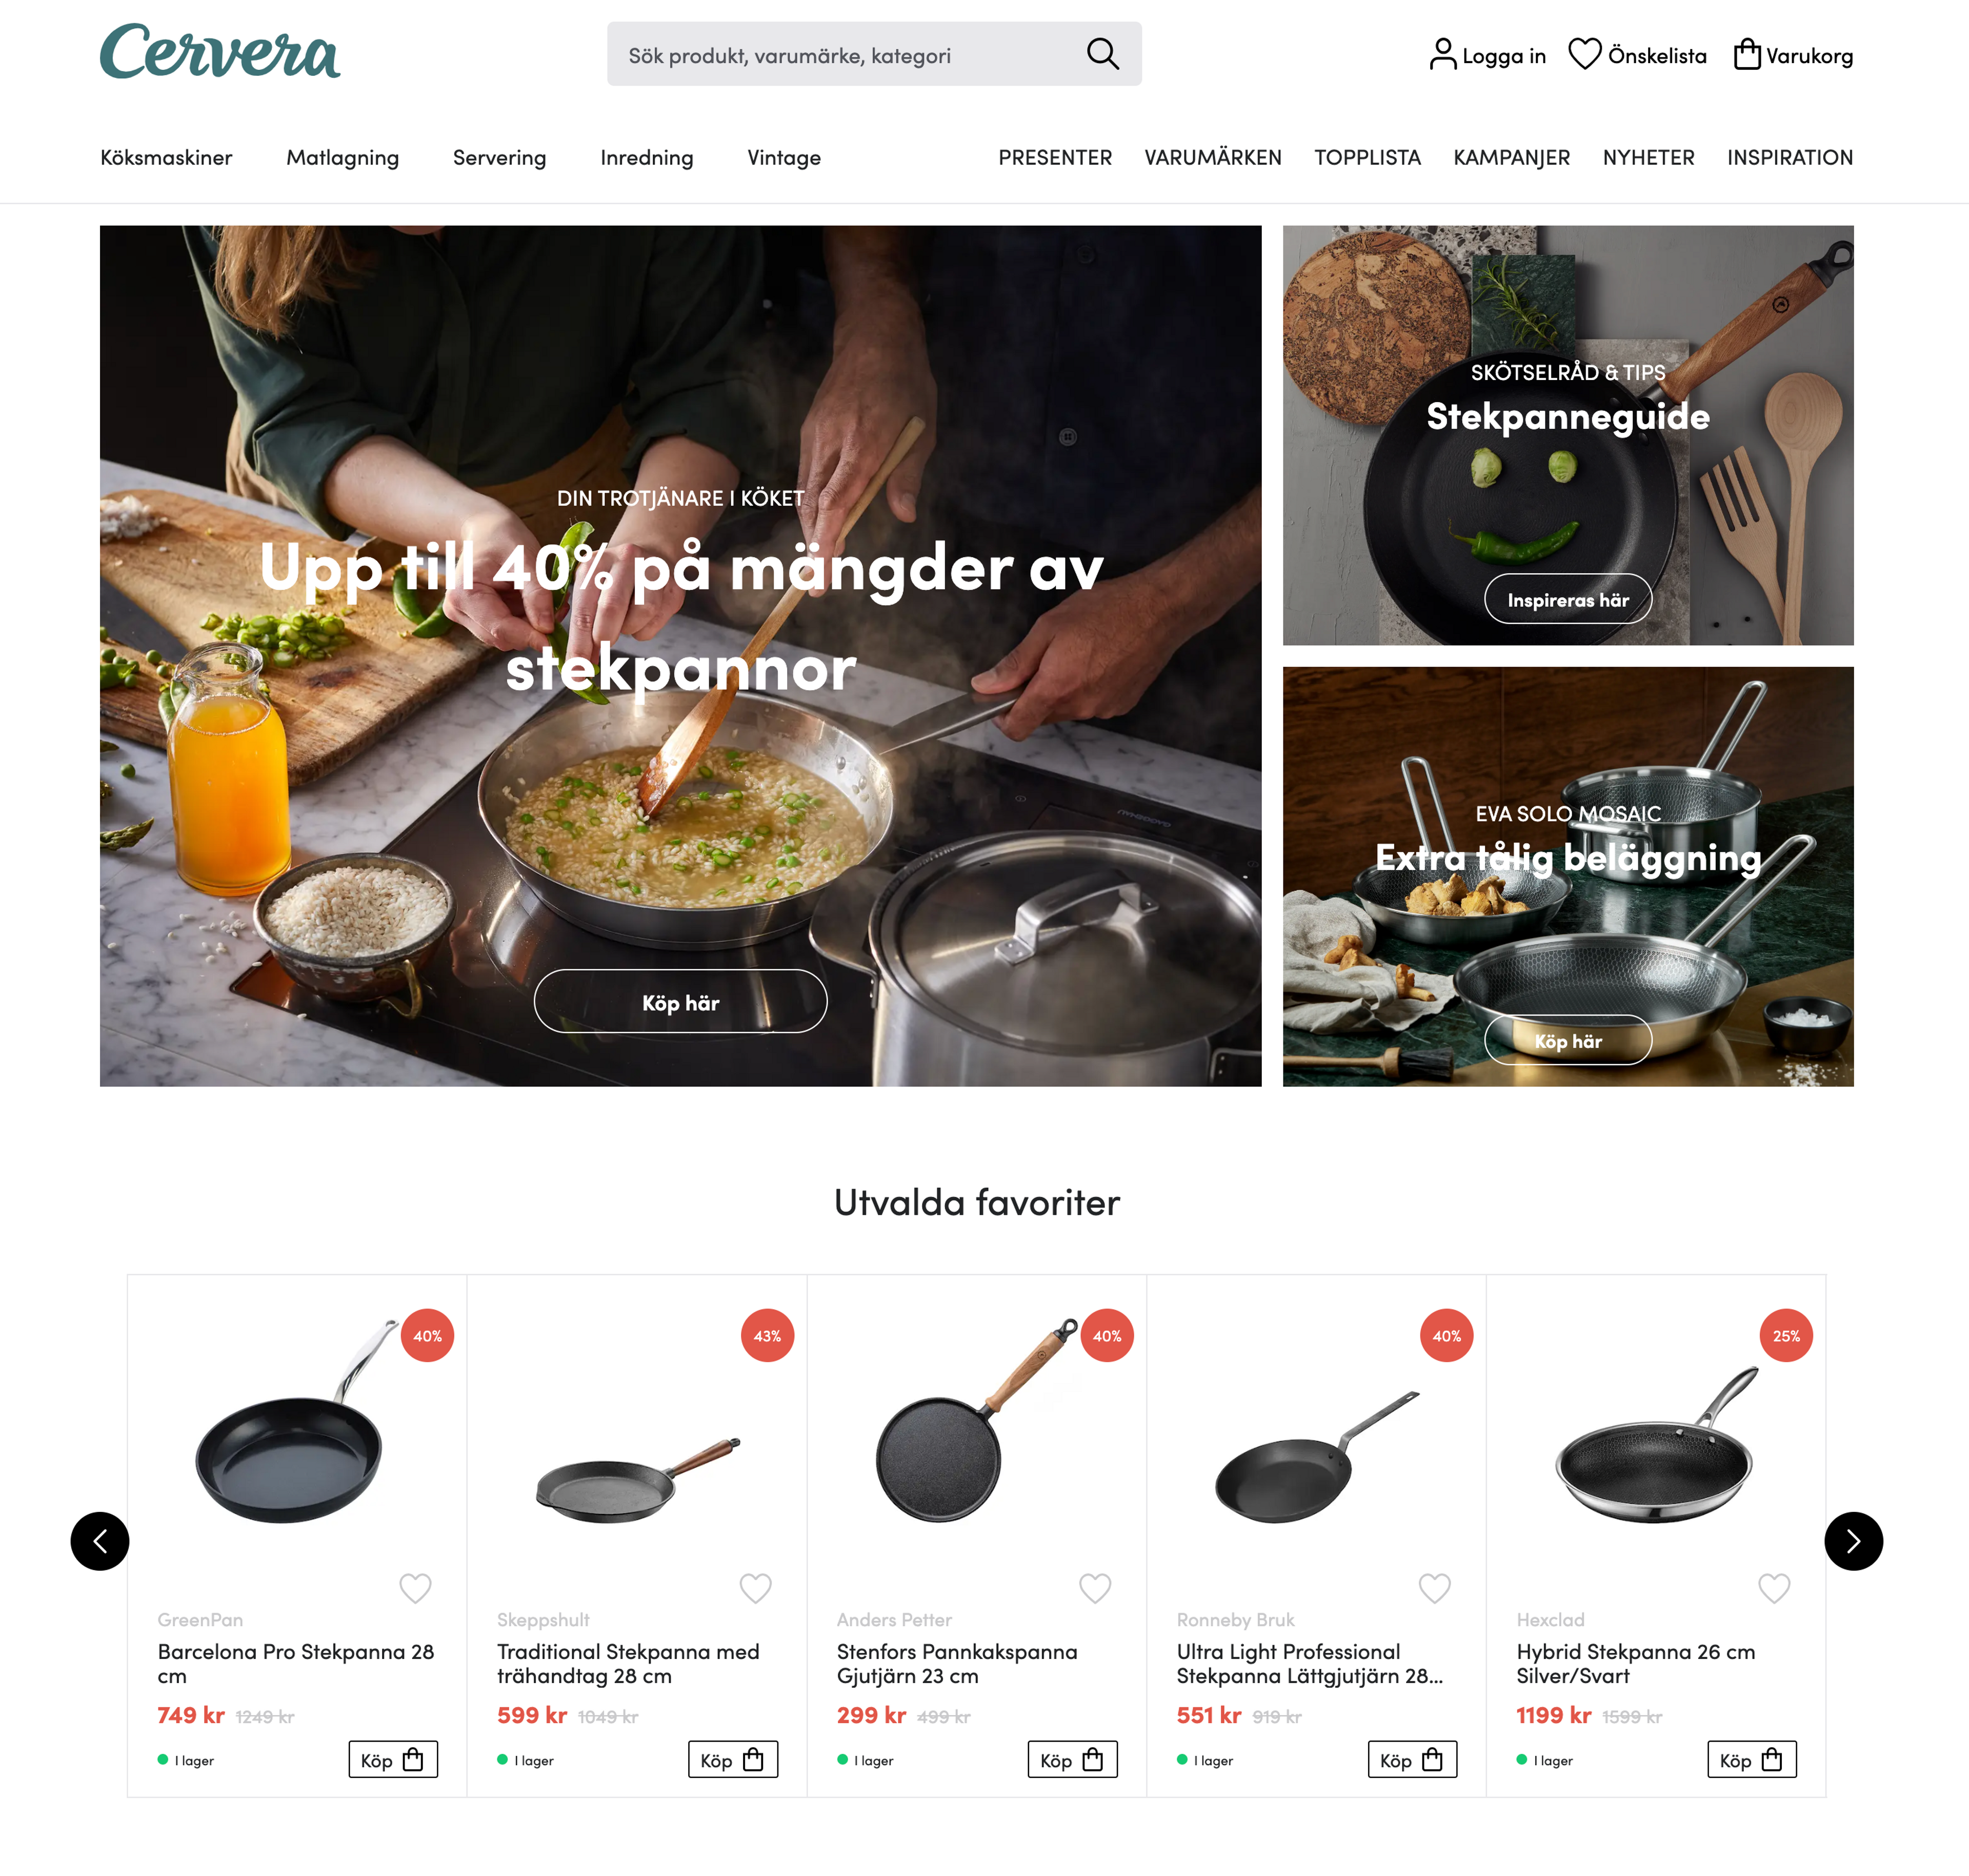 a screenshot of the cervera website shows a woman preparing food